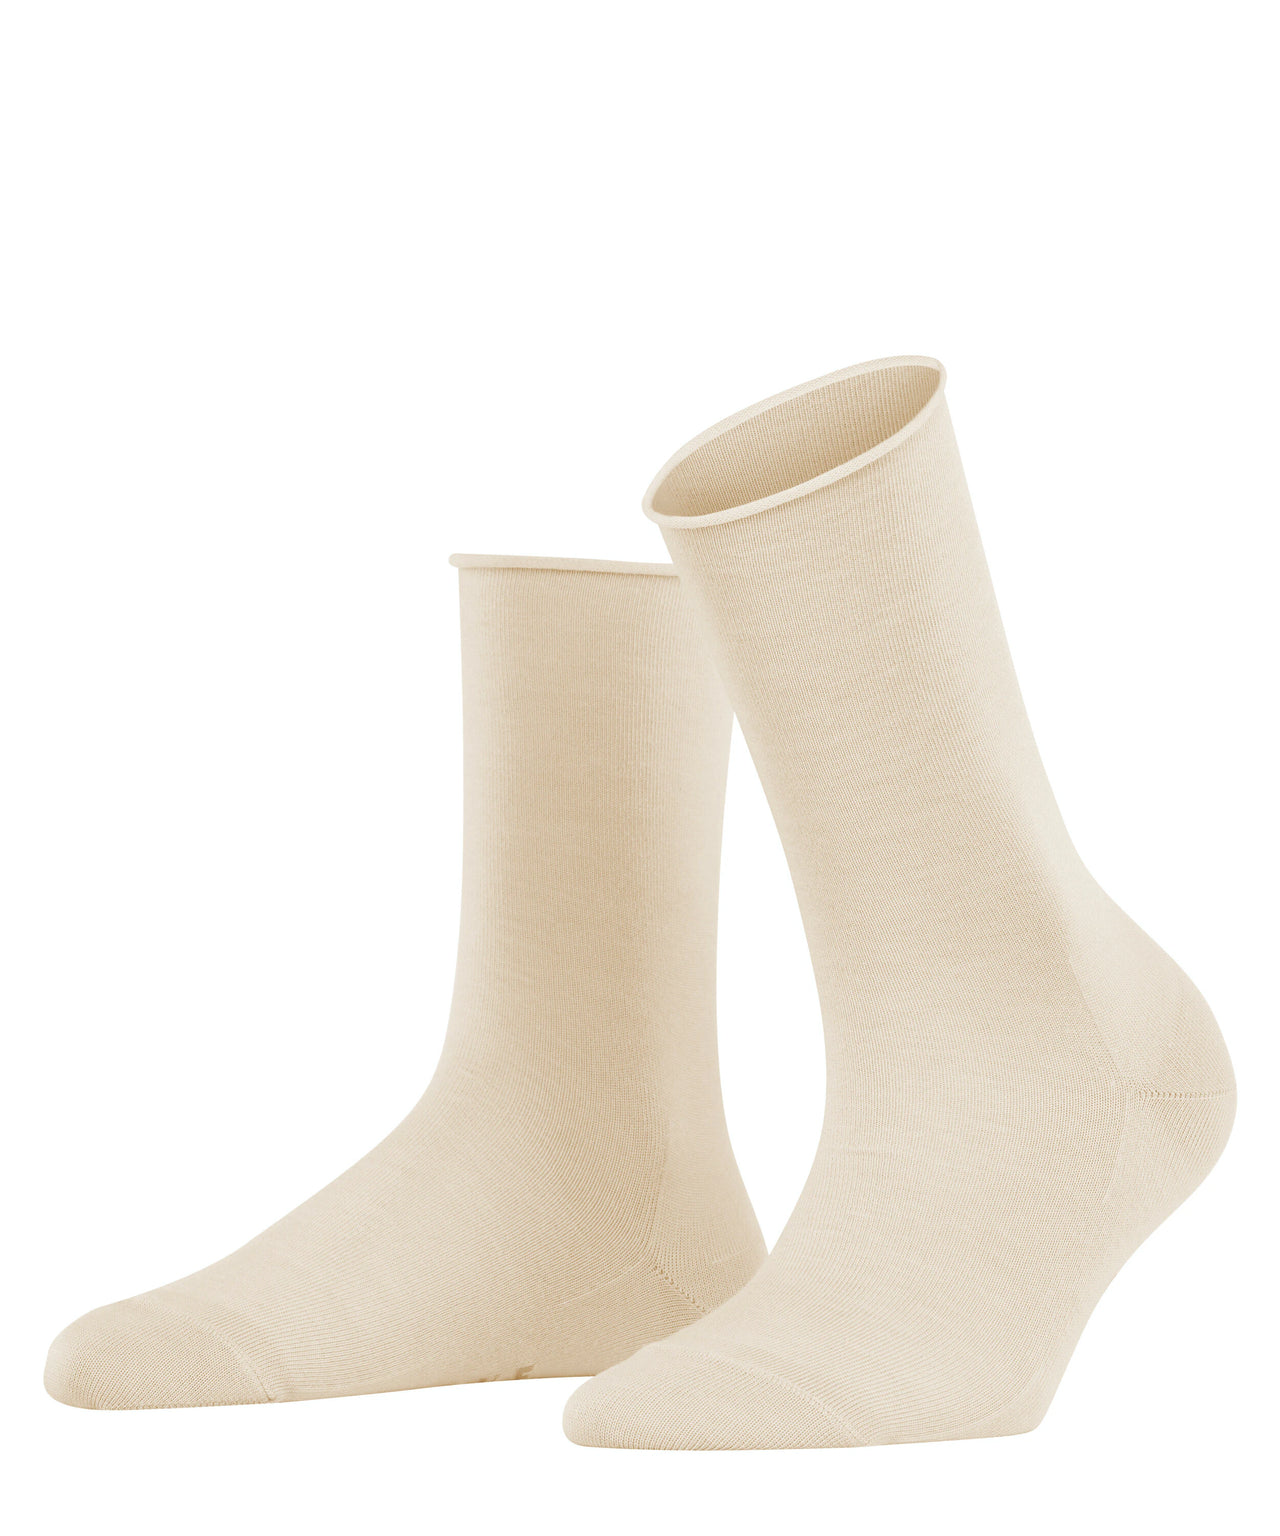 Falke Active Breeze Women's Socks - Cream